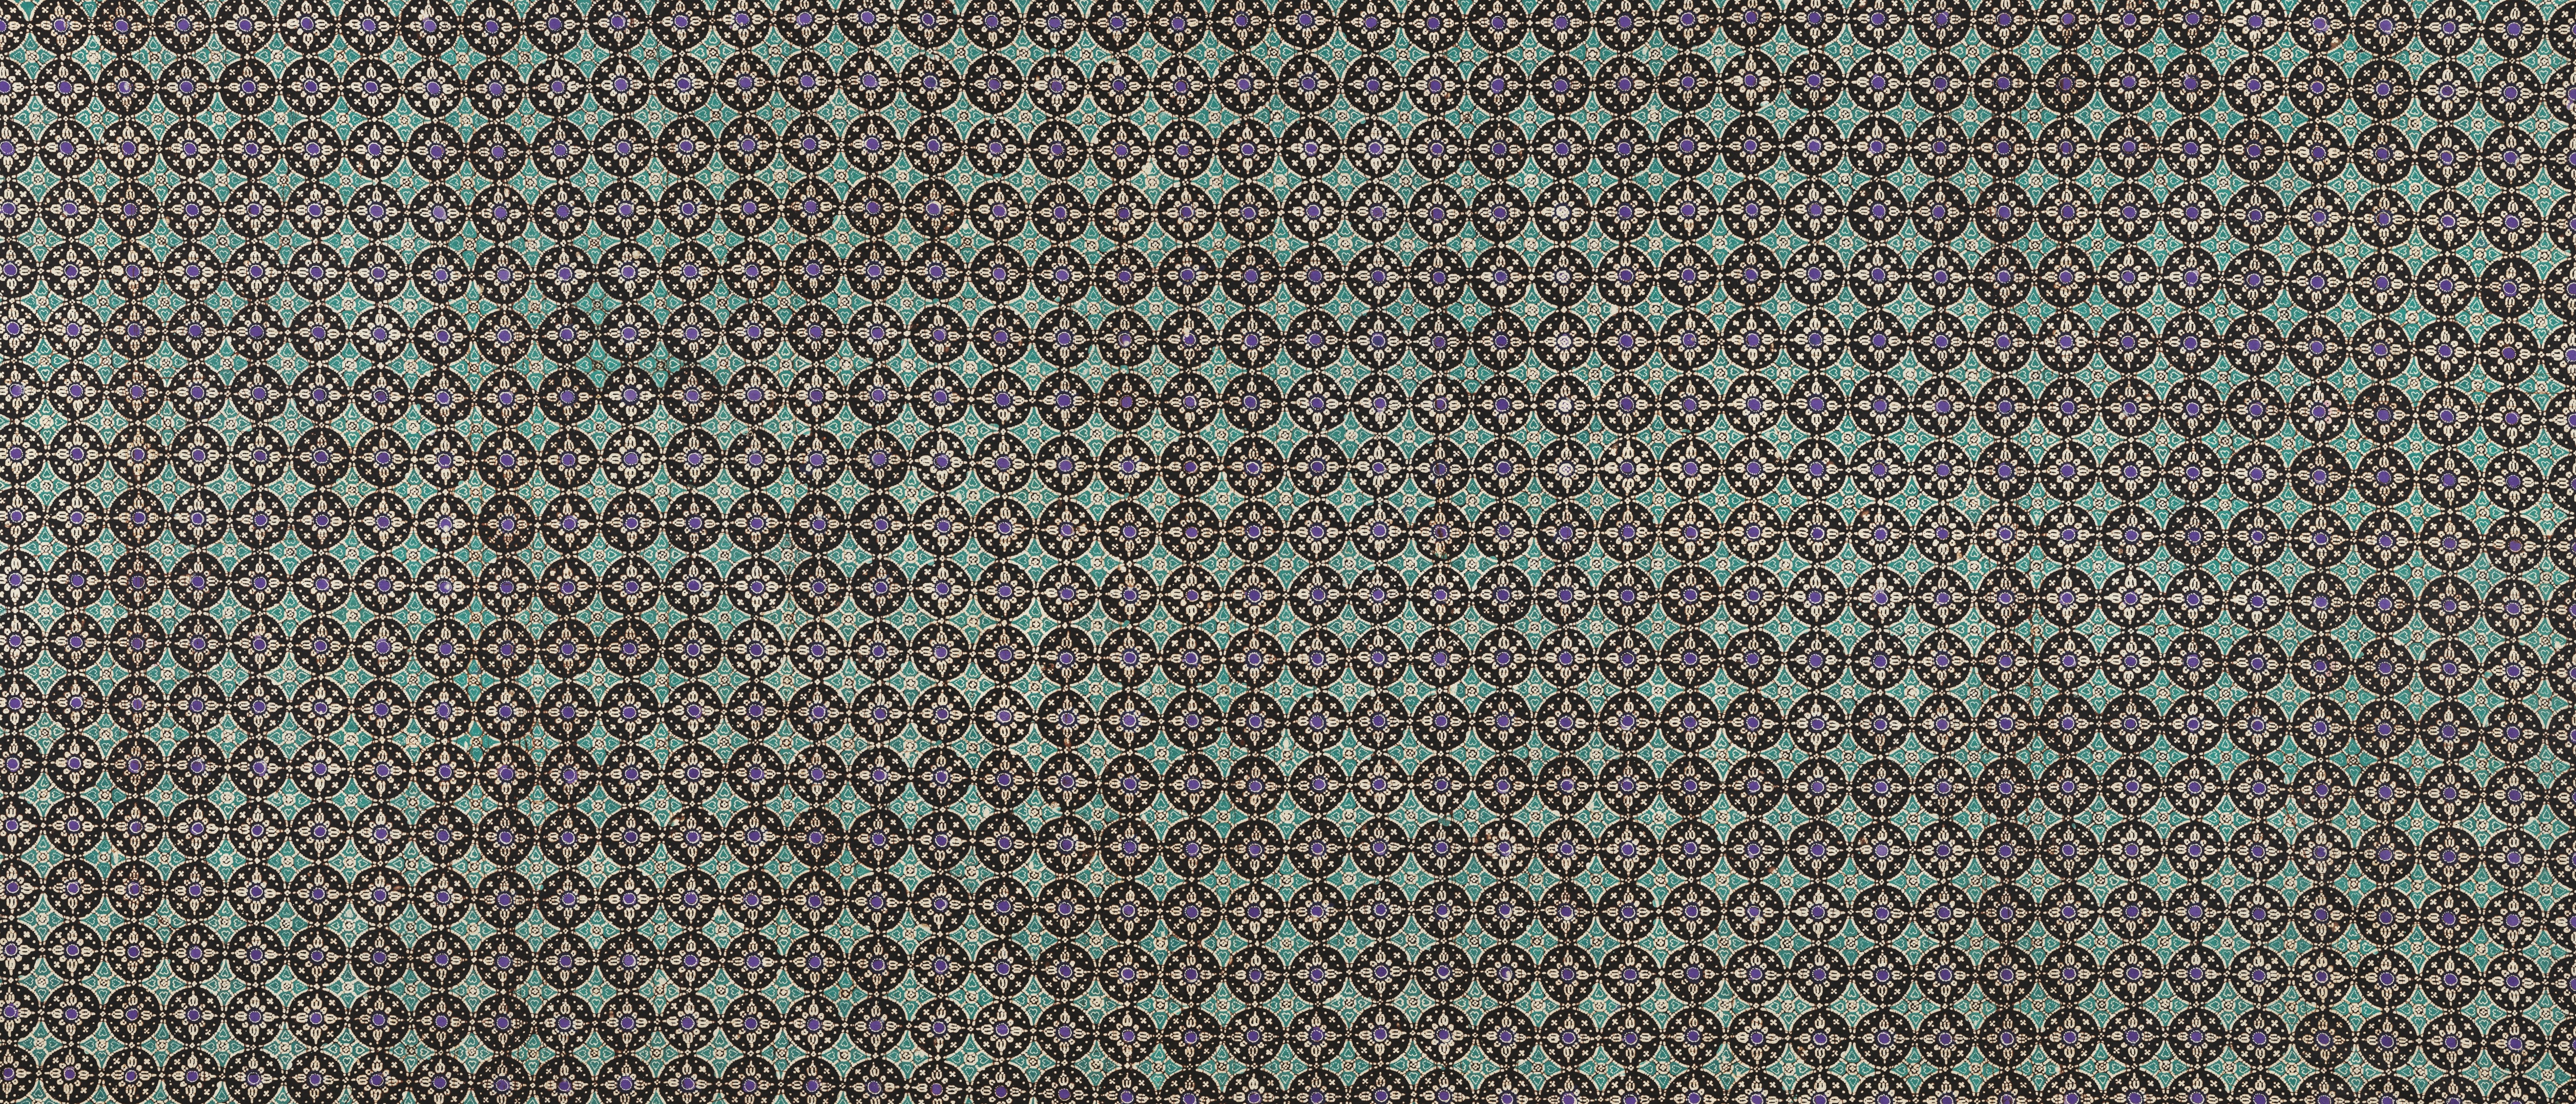 General 6054x2595 ultrawide fabric texture pattern symmetry digital art